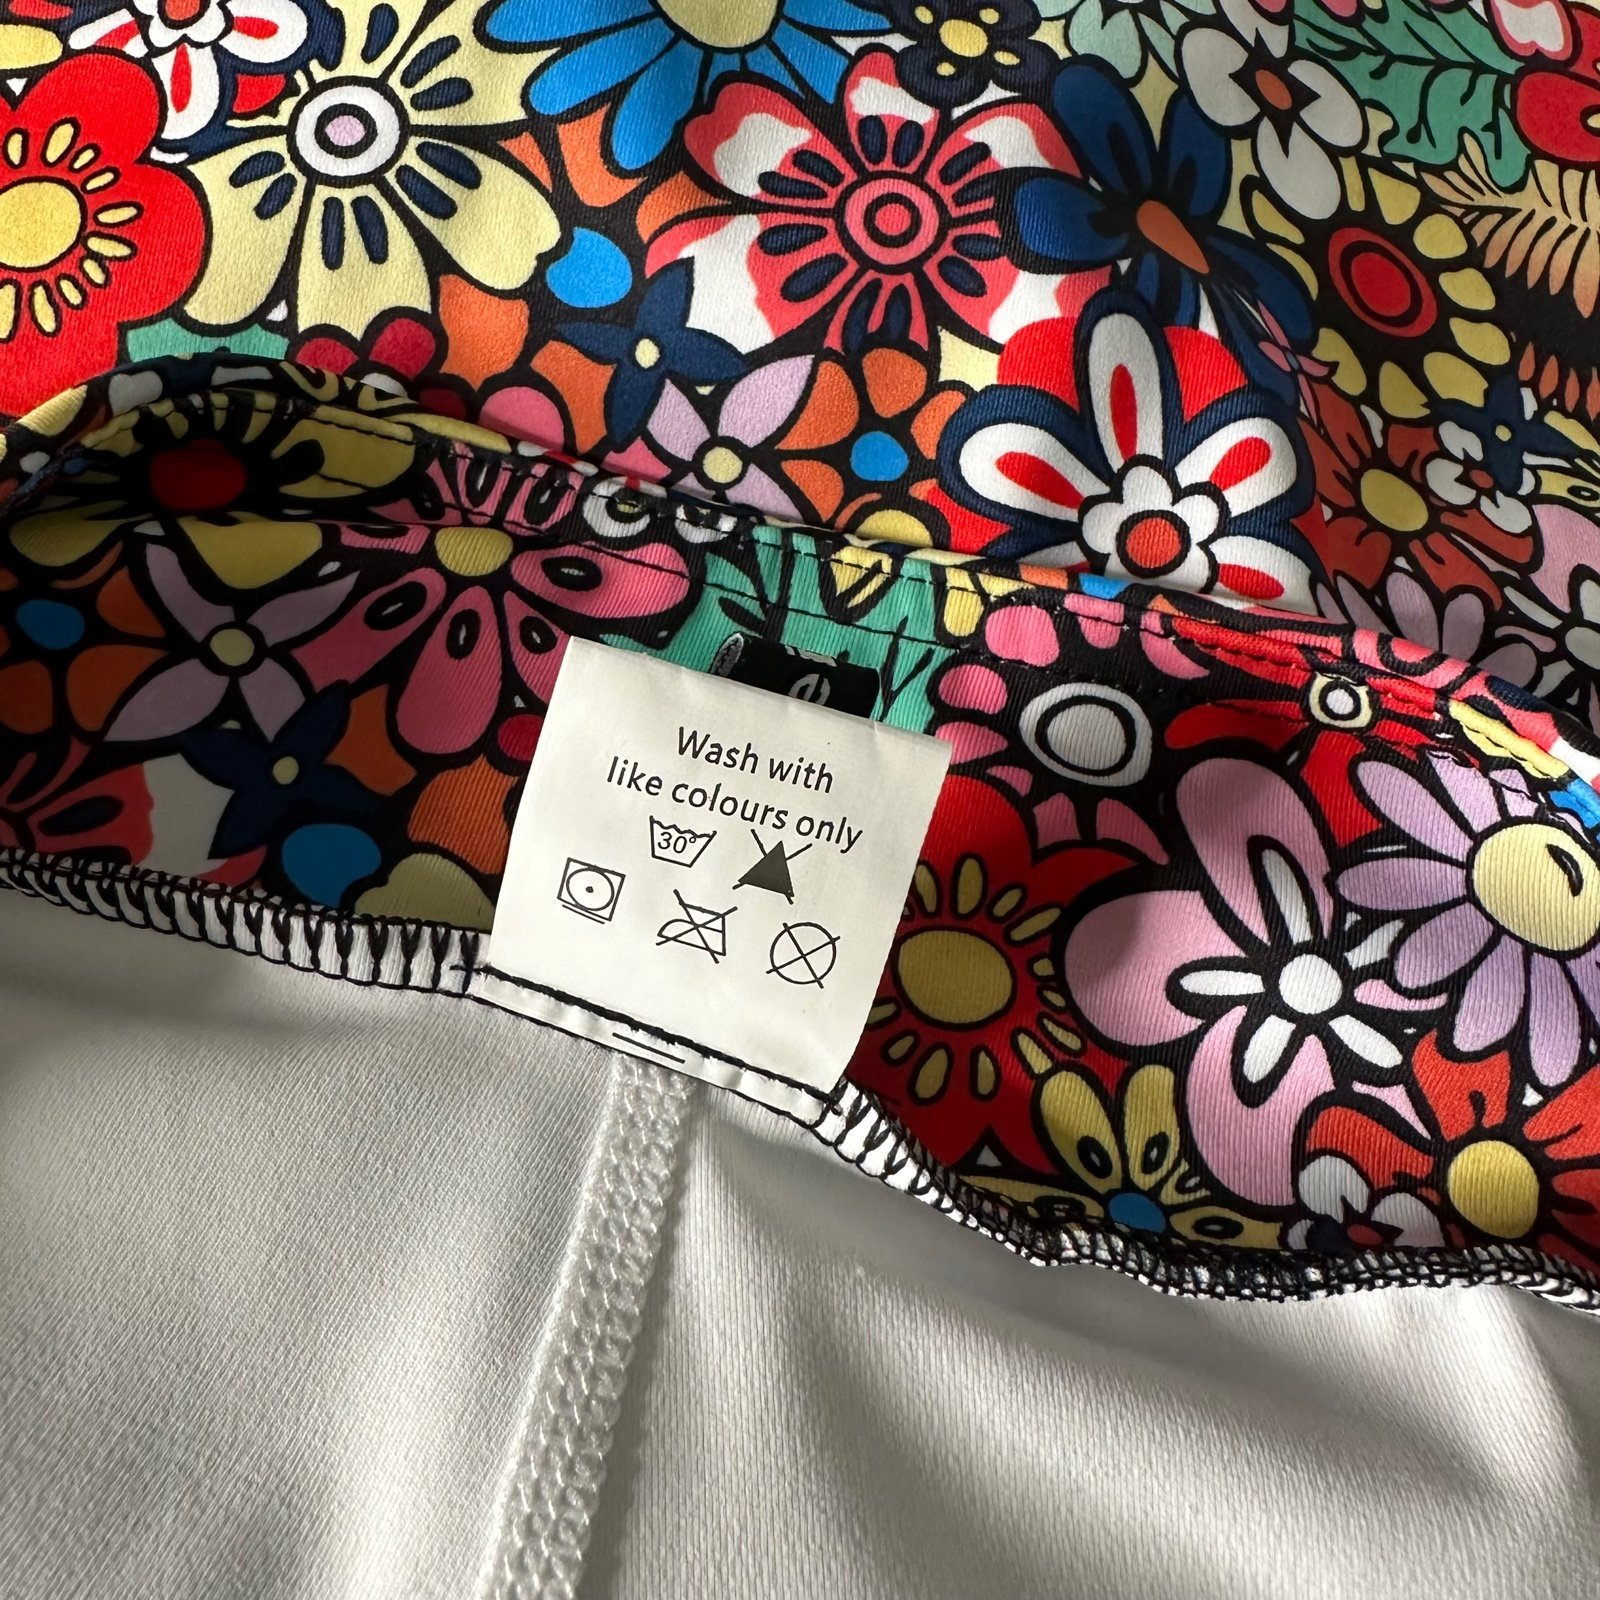 Stylish Loukeith Women´s Tennis Skort with Pocket Skirt with Shorts Athletic Golf Size S IdlorYDJx New Style